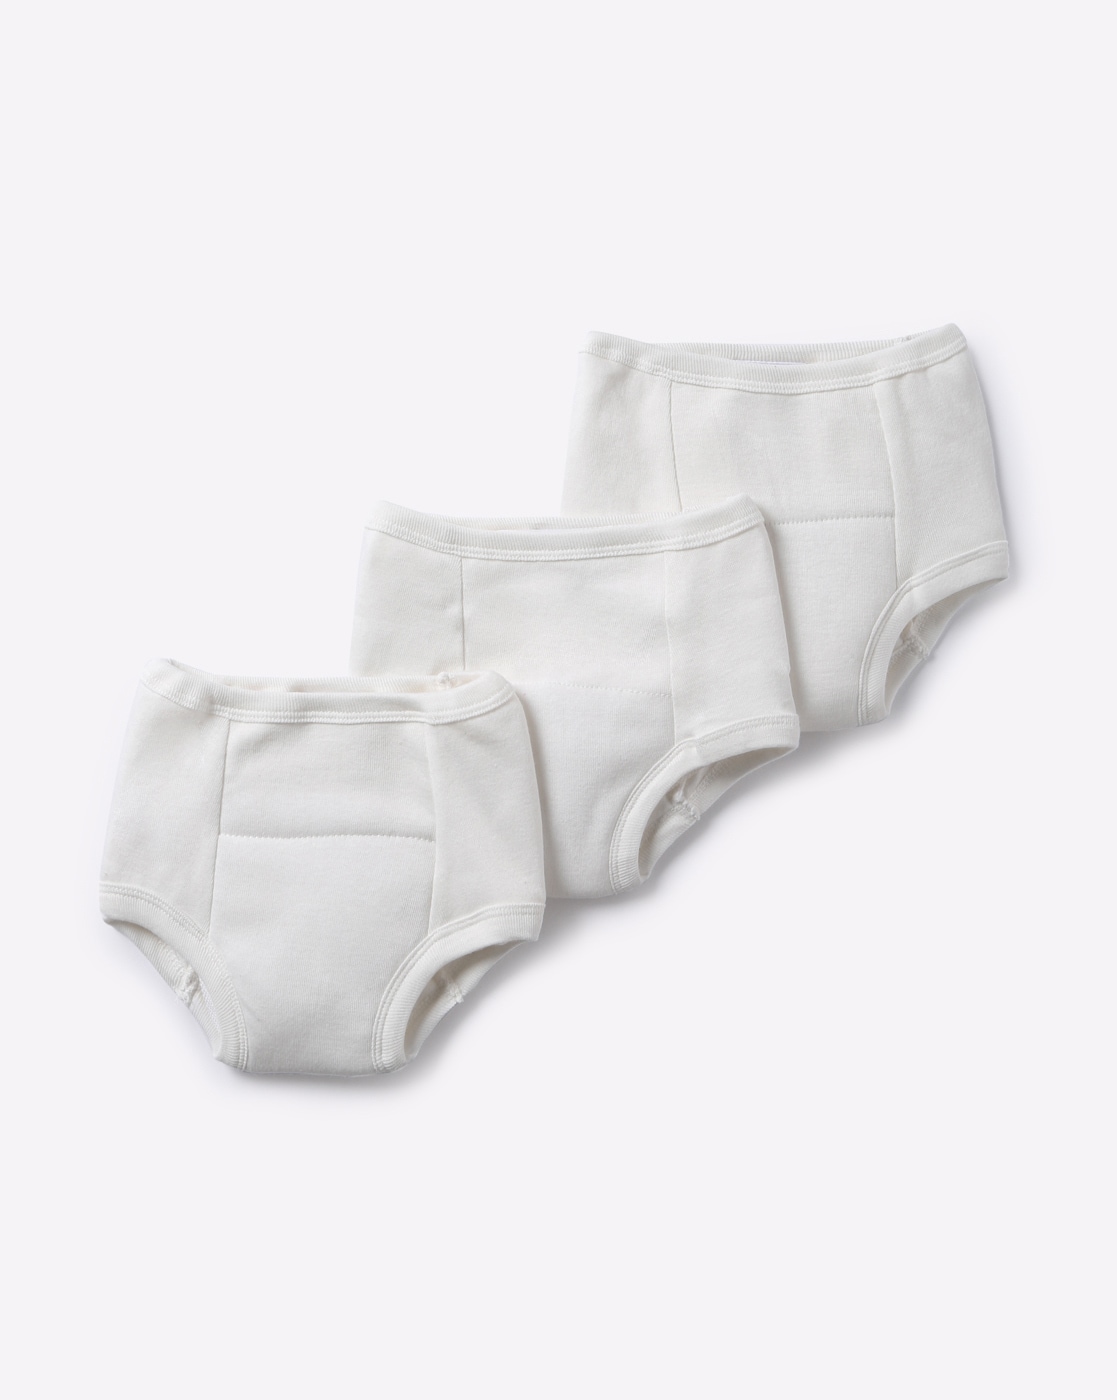 Buy Potty Training Pants Online Padded Underwear for Kids by Snugkins